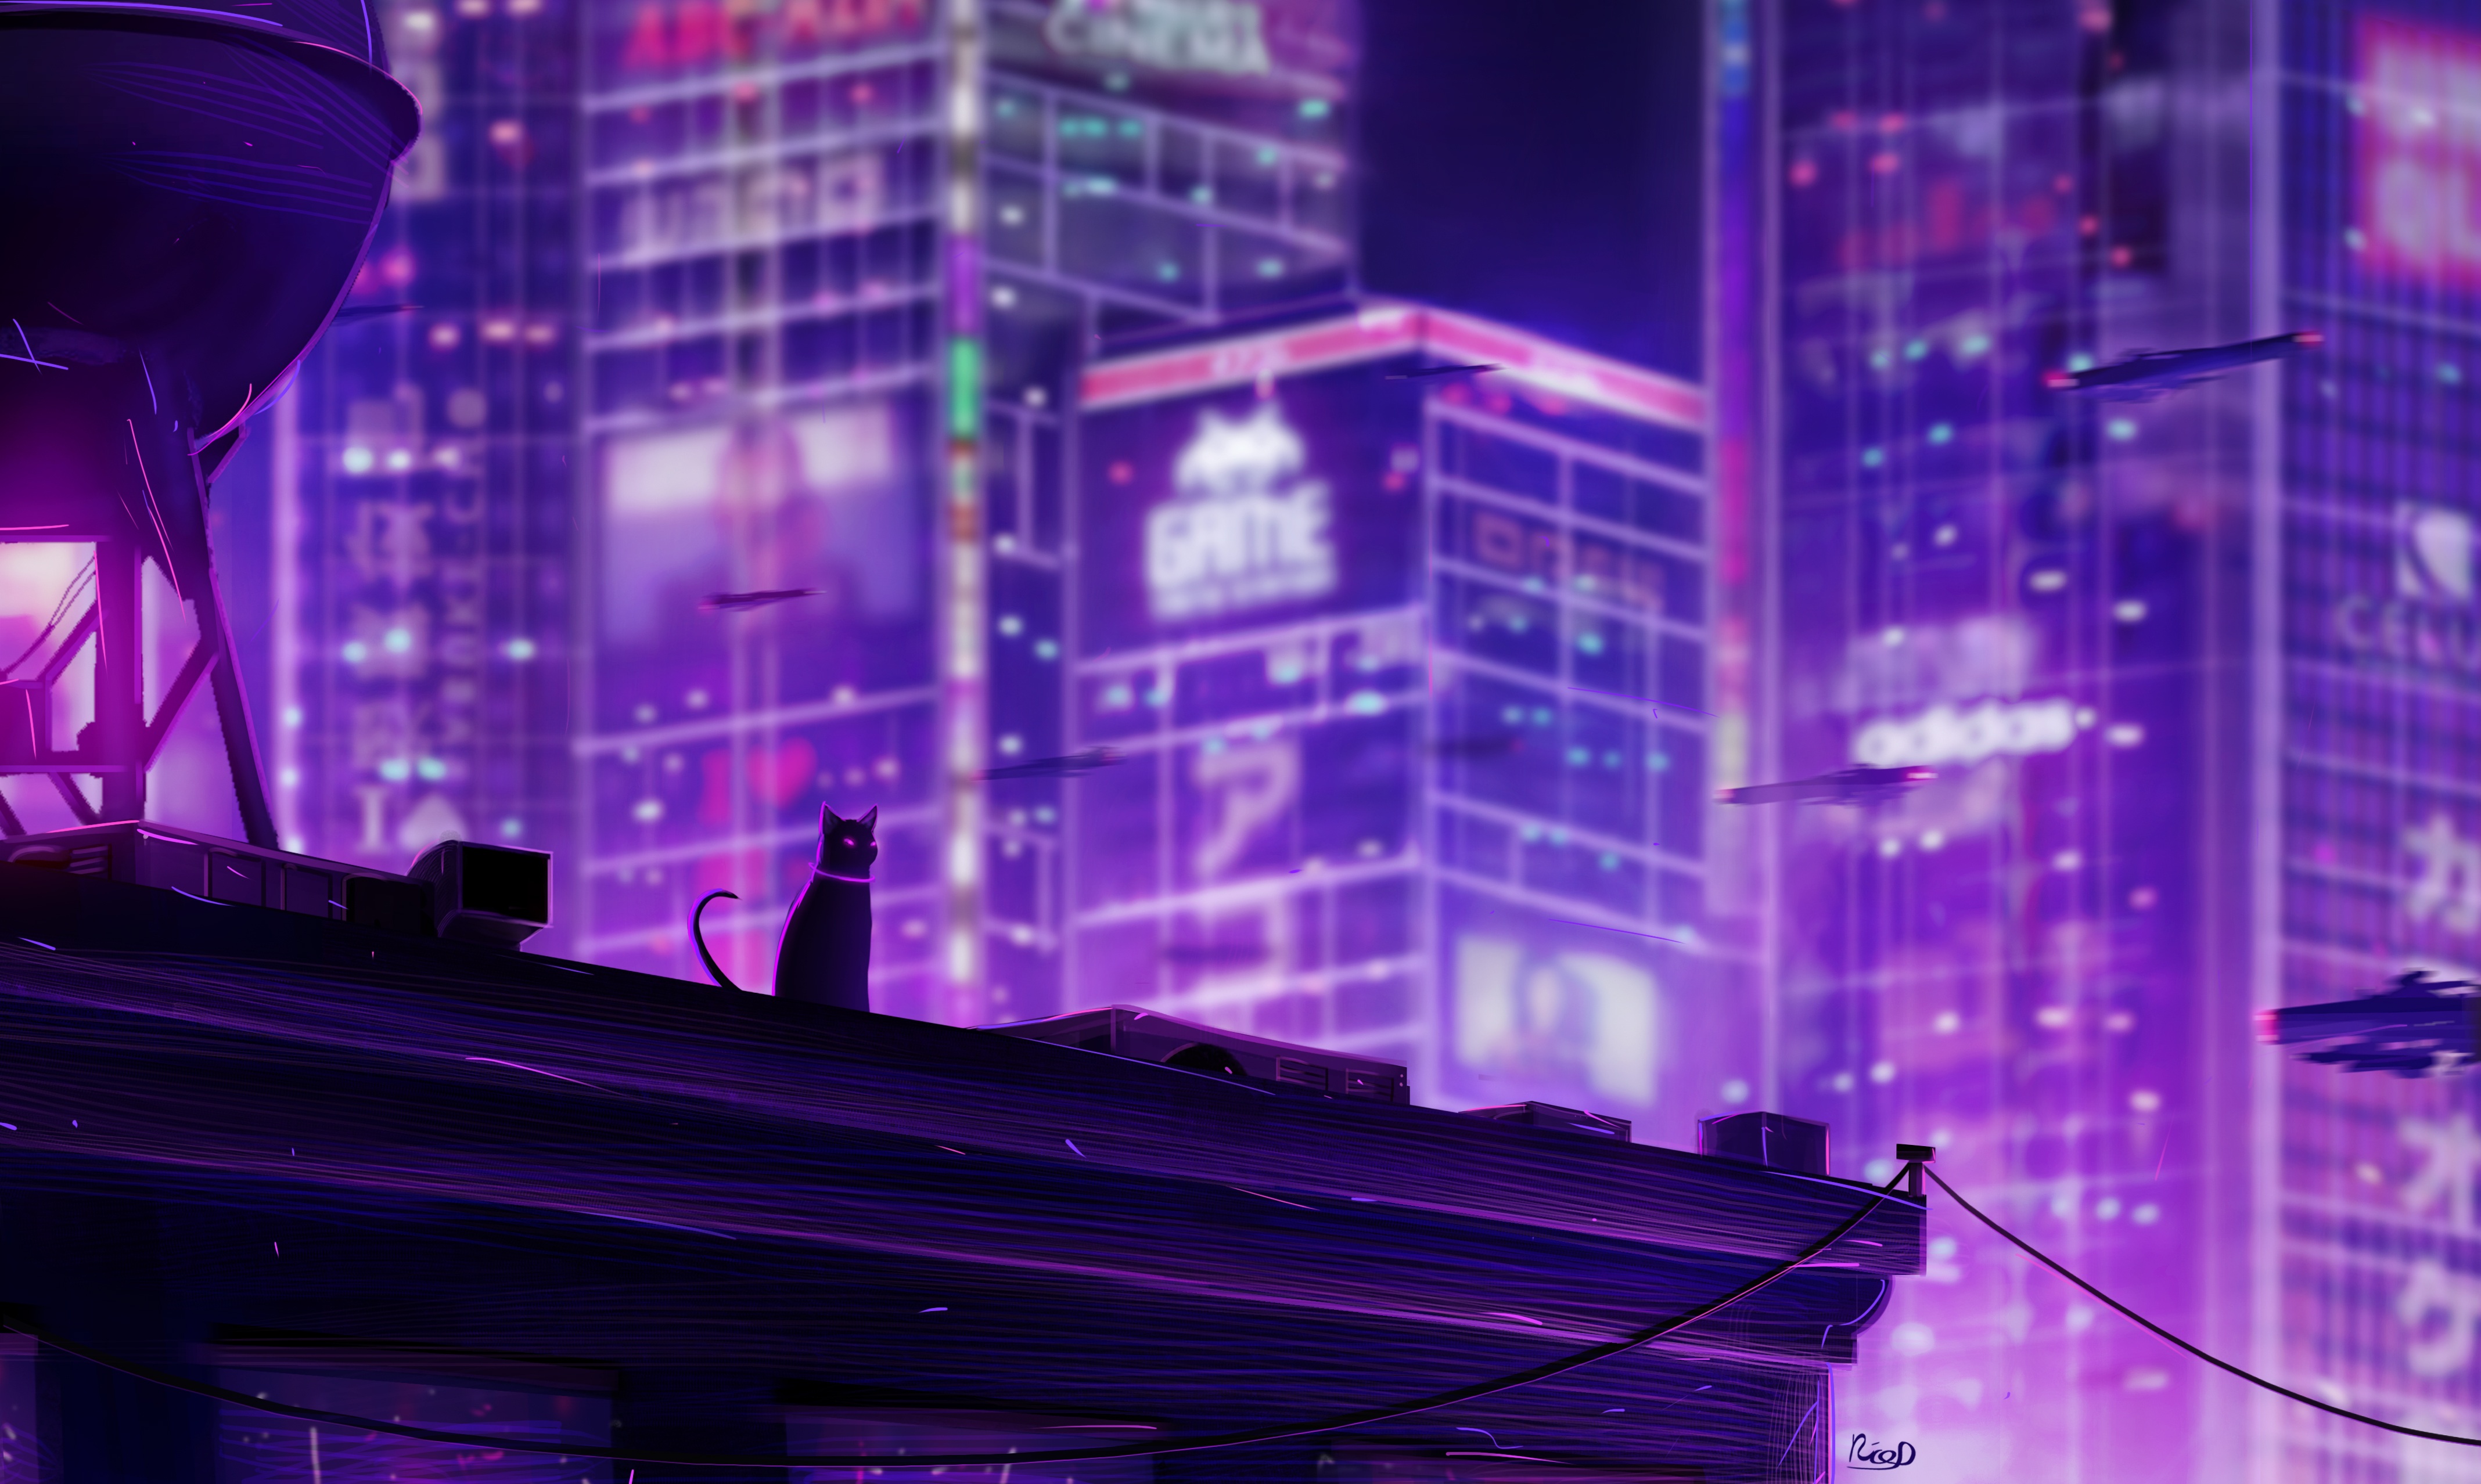 Neo Tokyo 4k Ultra HD Wallpaper | Background Image ...